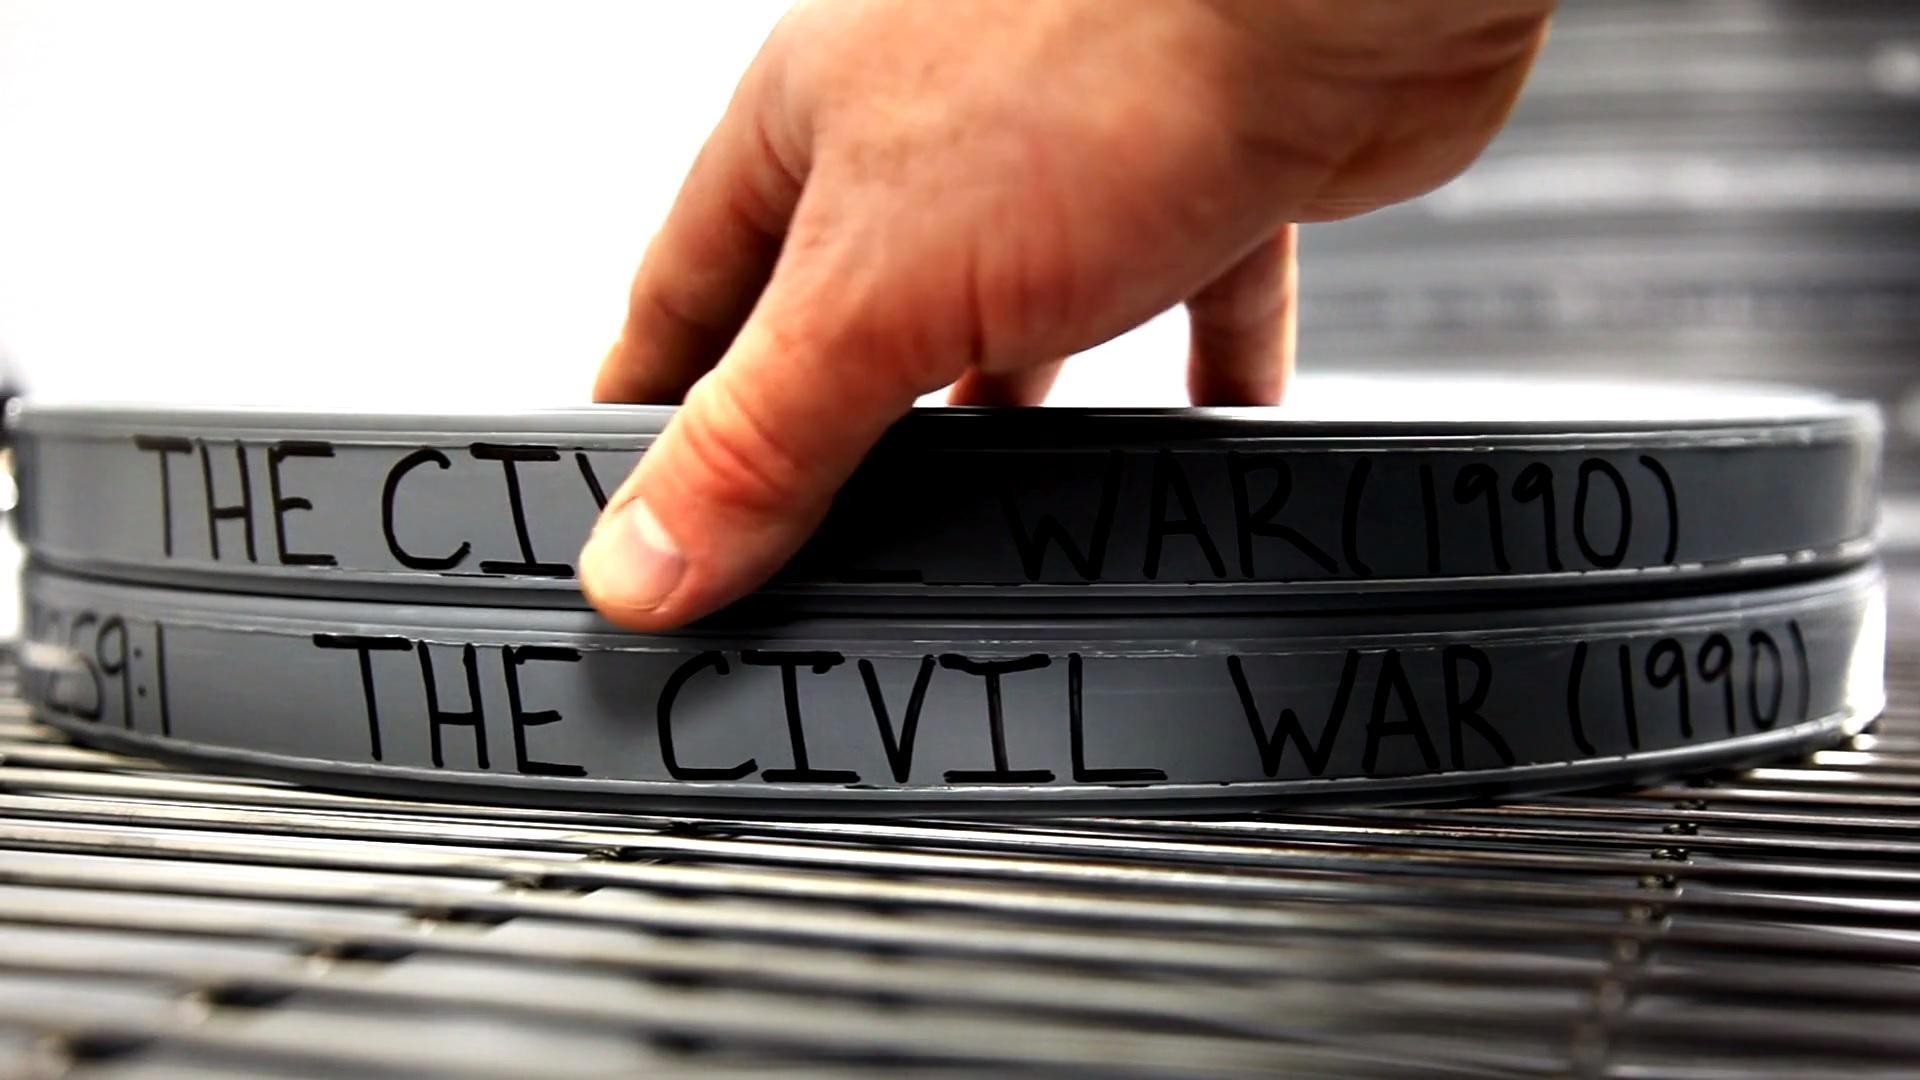 Film reel canisters for Ken Burns' The Civil War